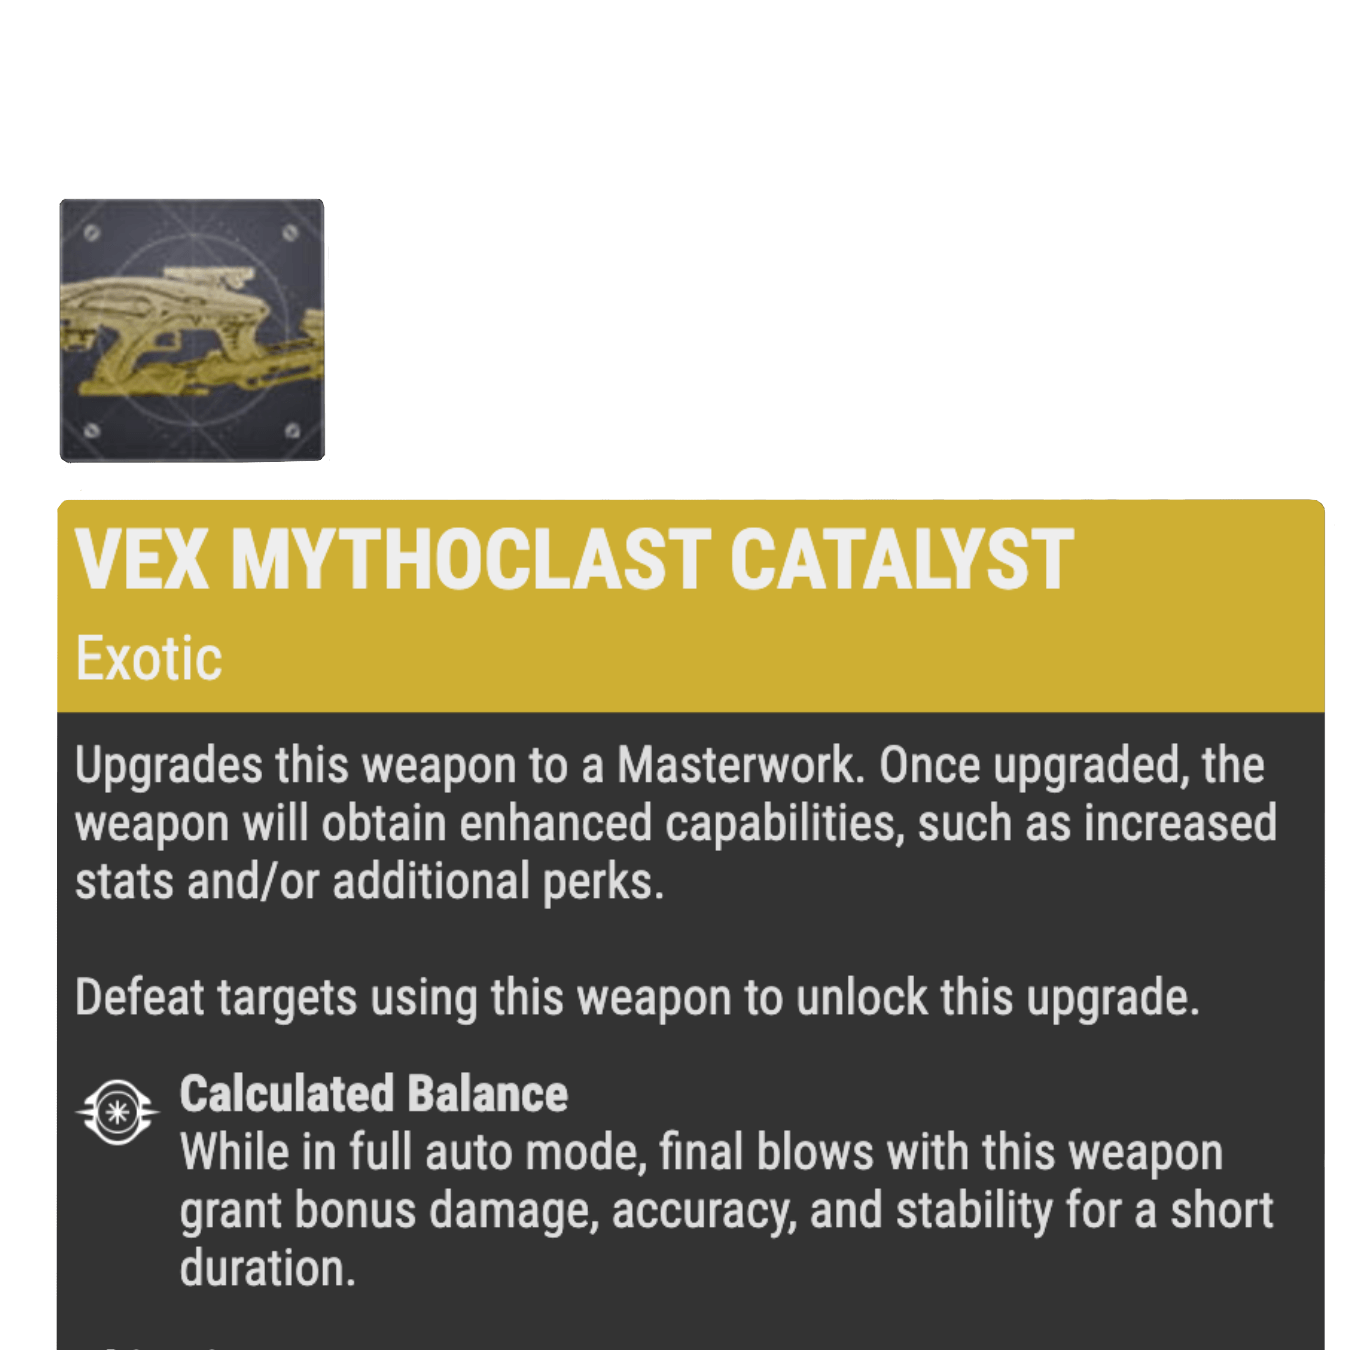 Vex Mythoclast Catalyst boost